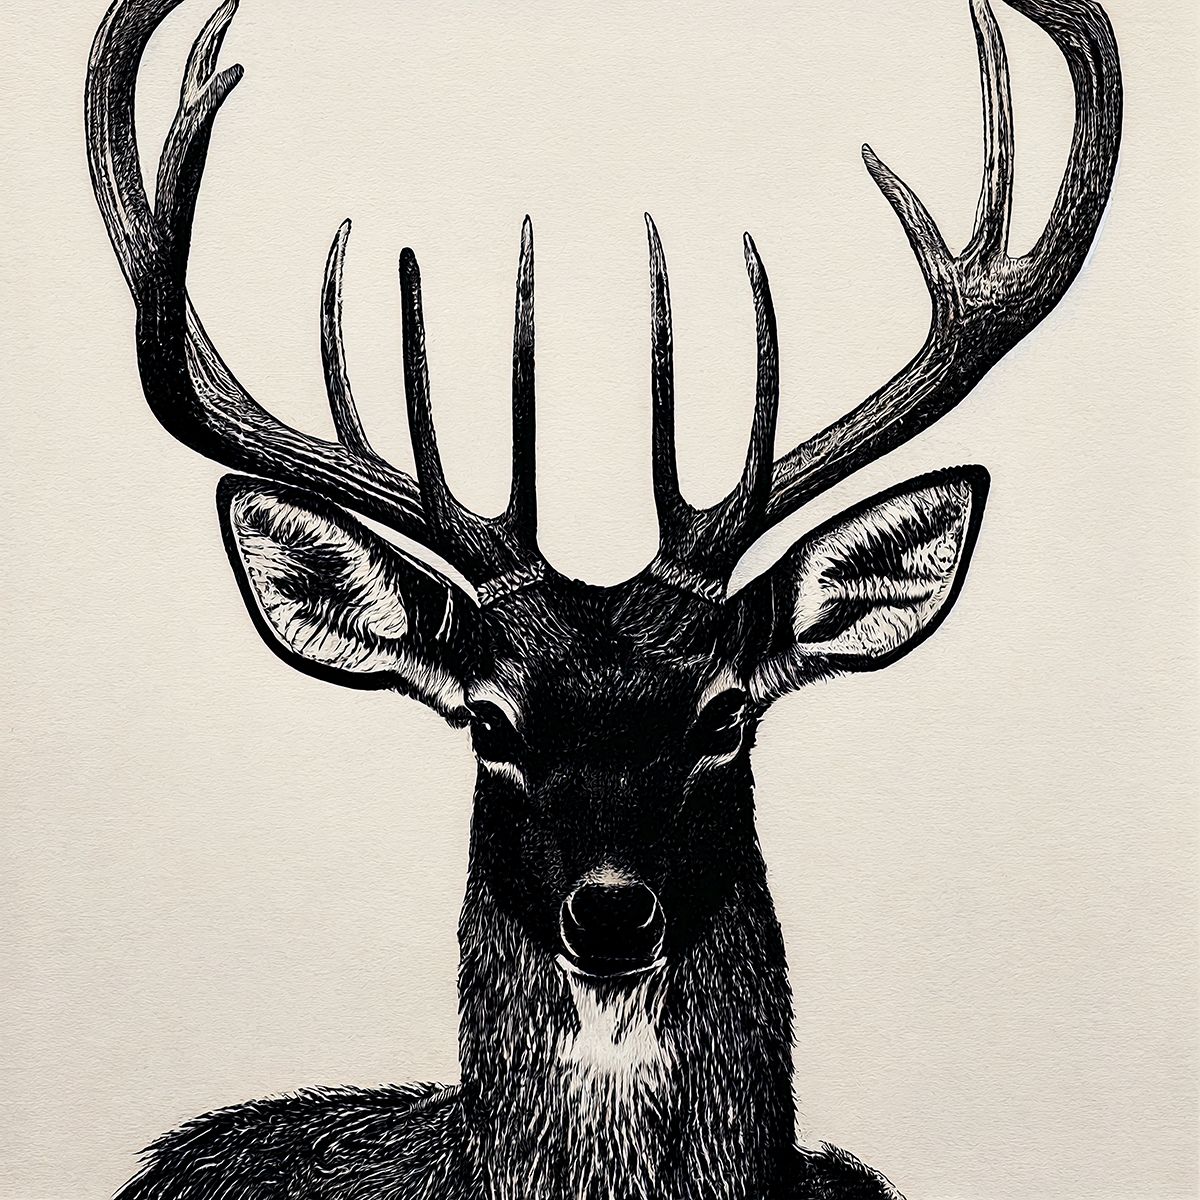  Regal Majesty: 'Stag' Animal Art - Print on Fine Art Paper. ARTEMYST